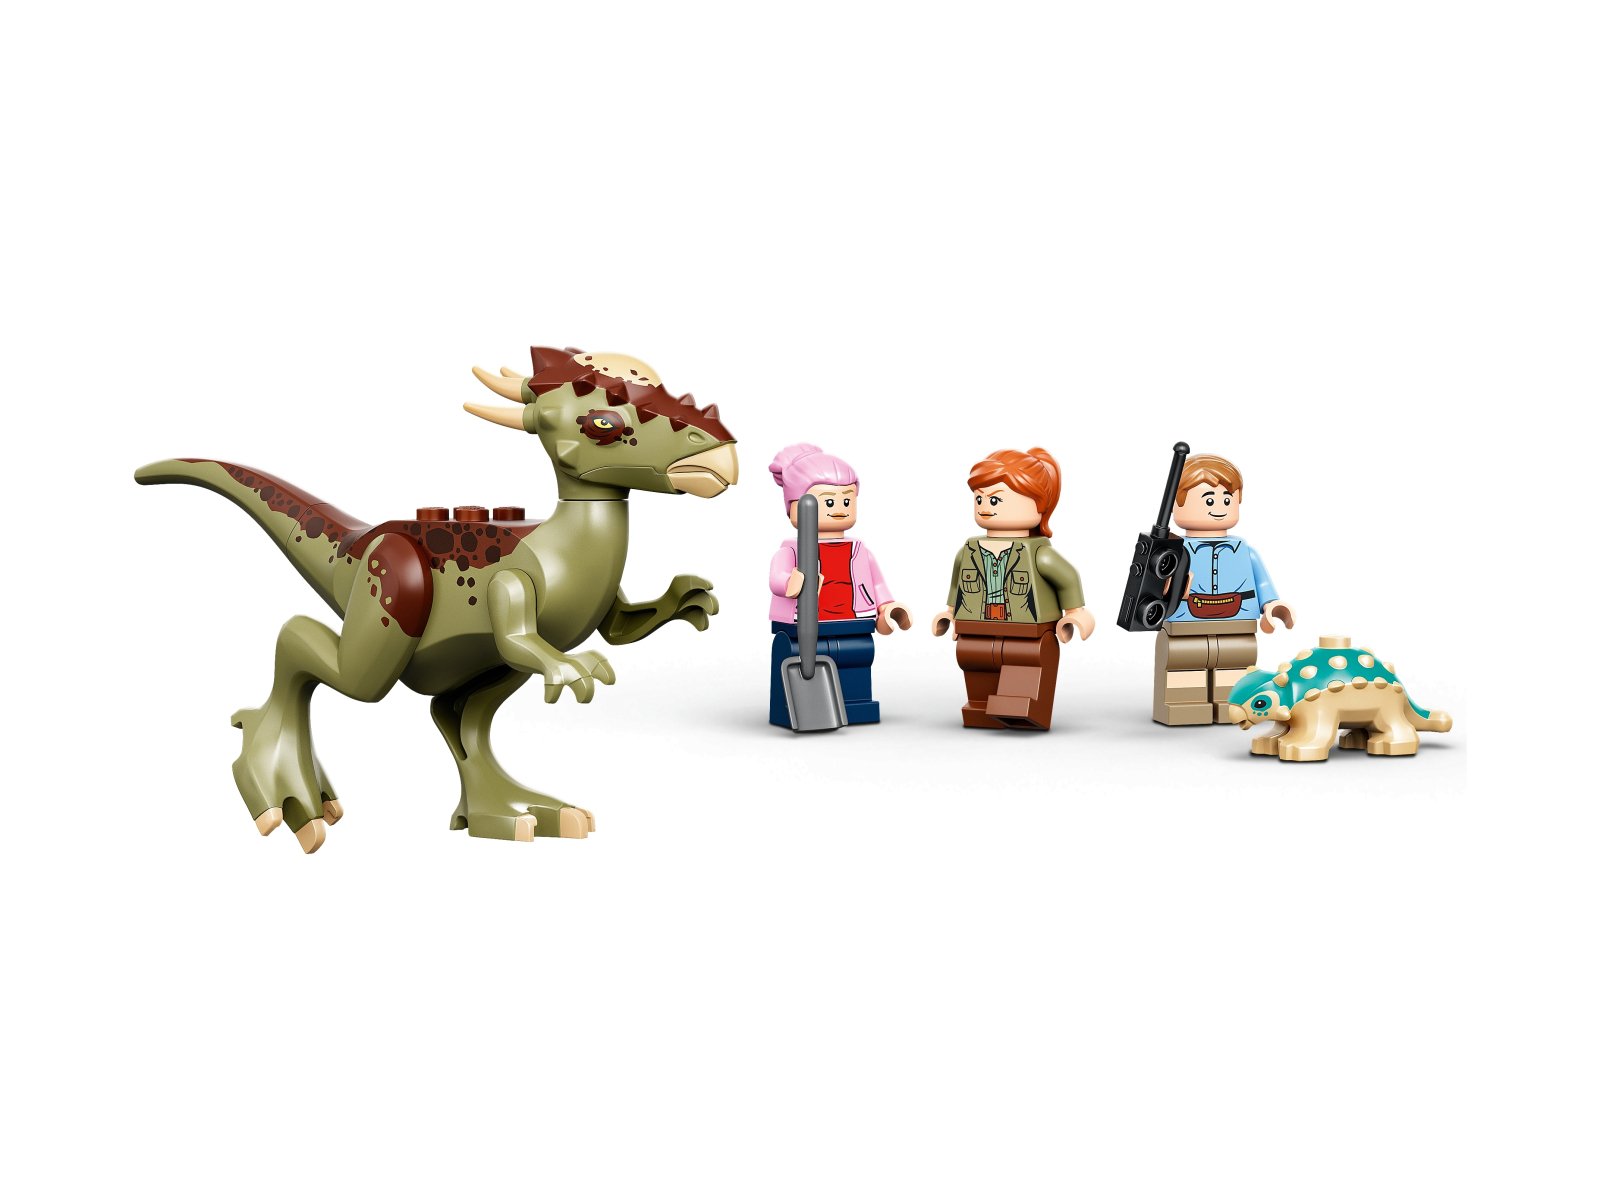 LEGO 76939 Jurassic World Ucieczka stygimolocha